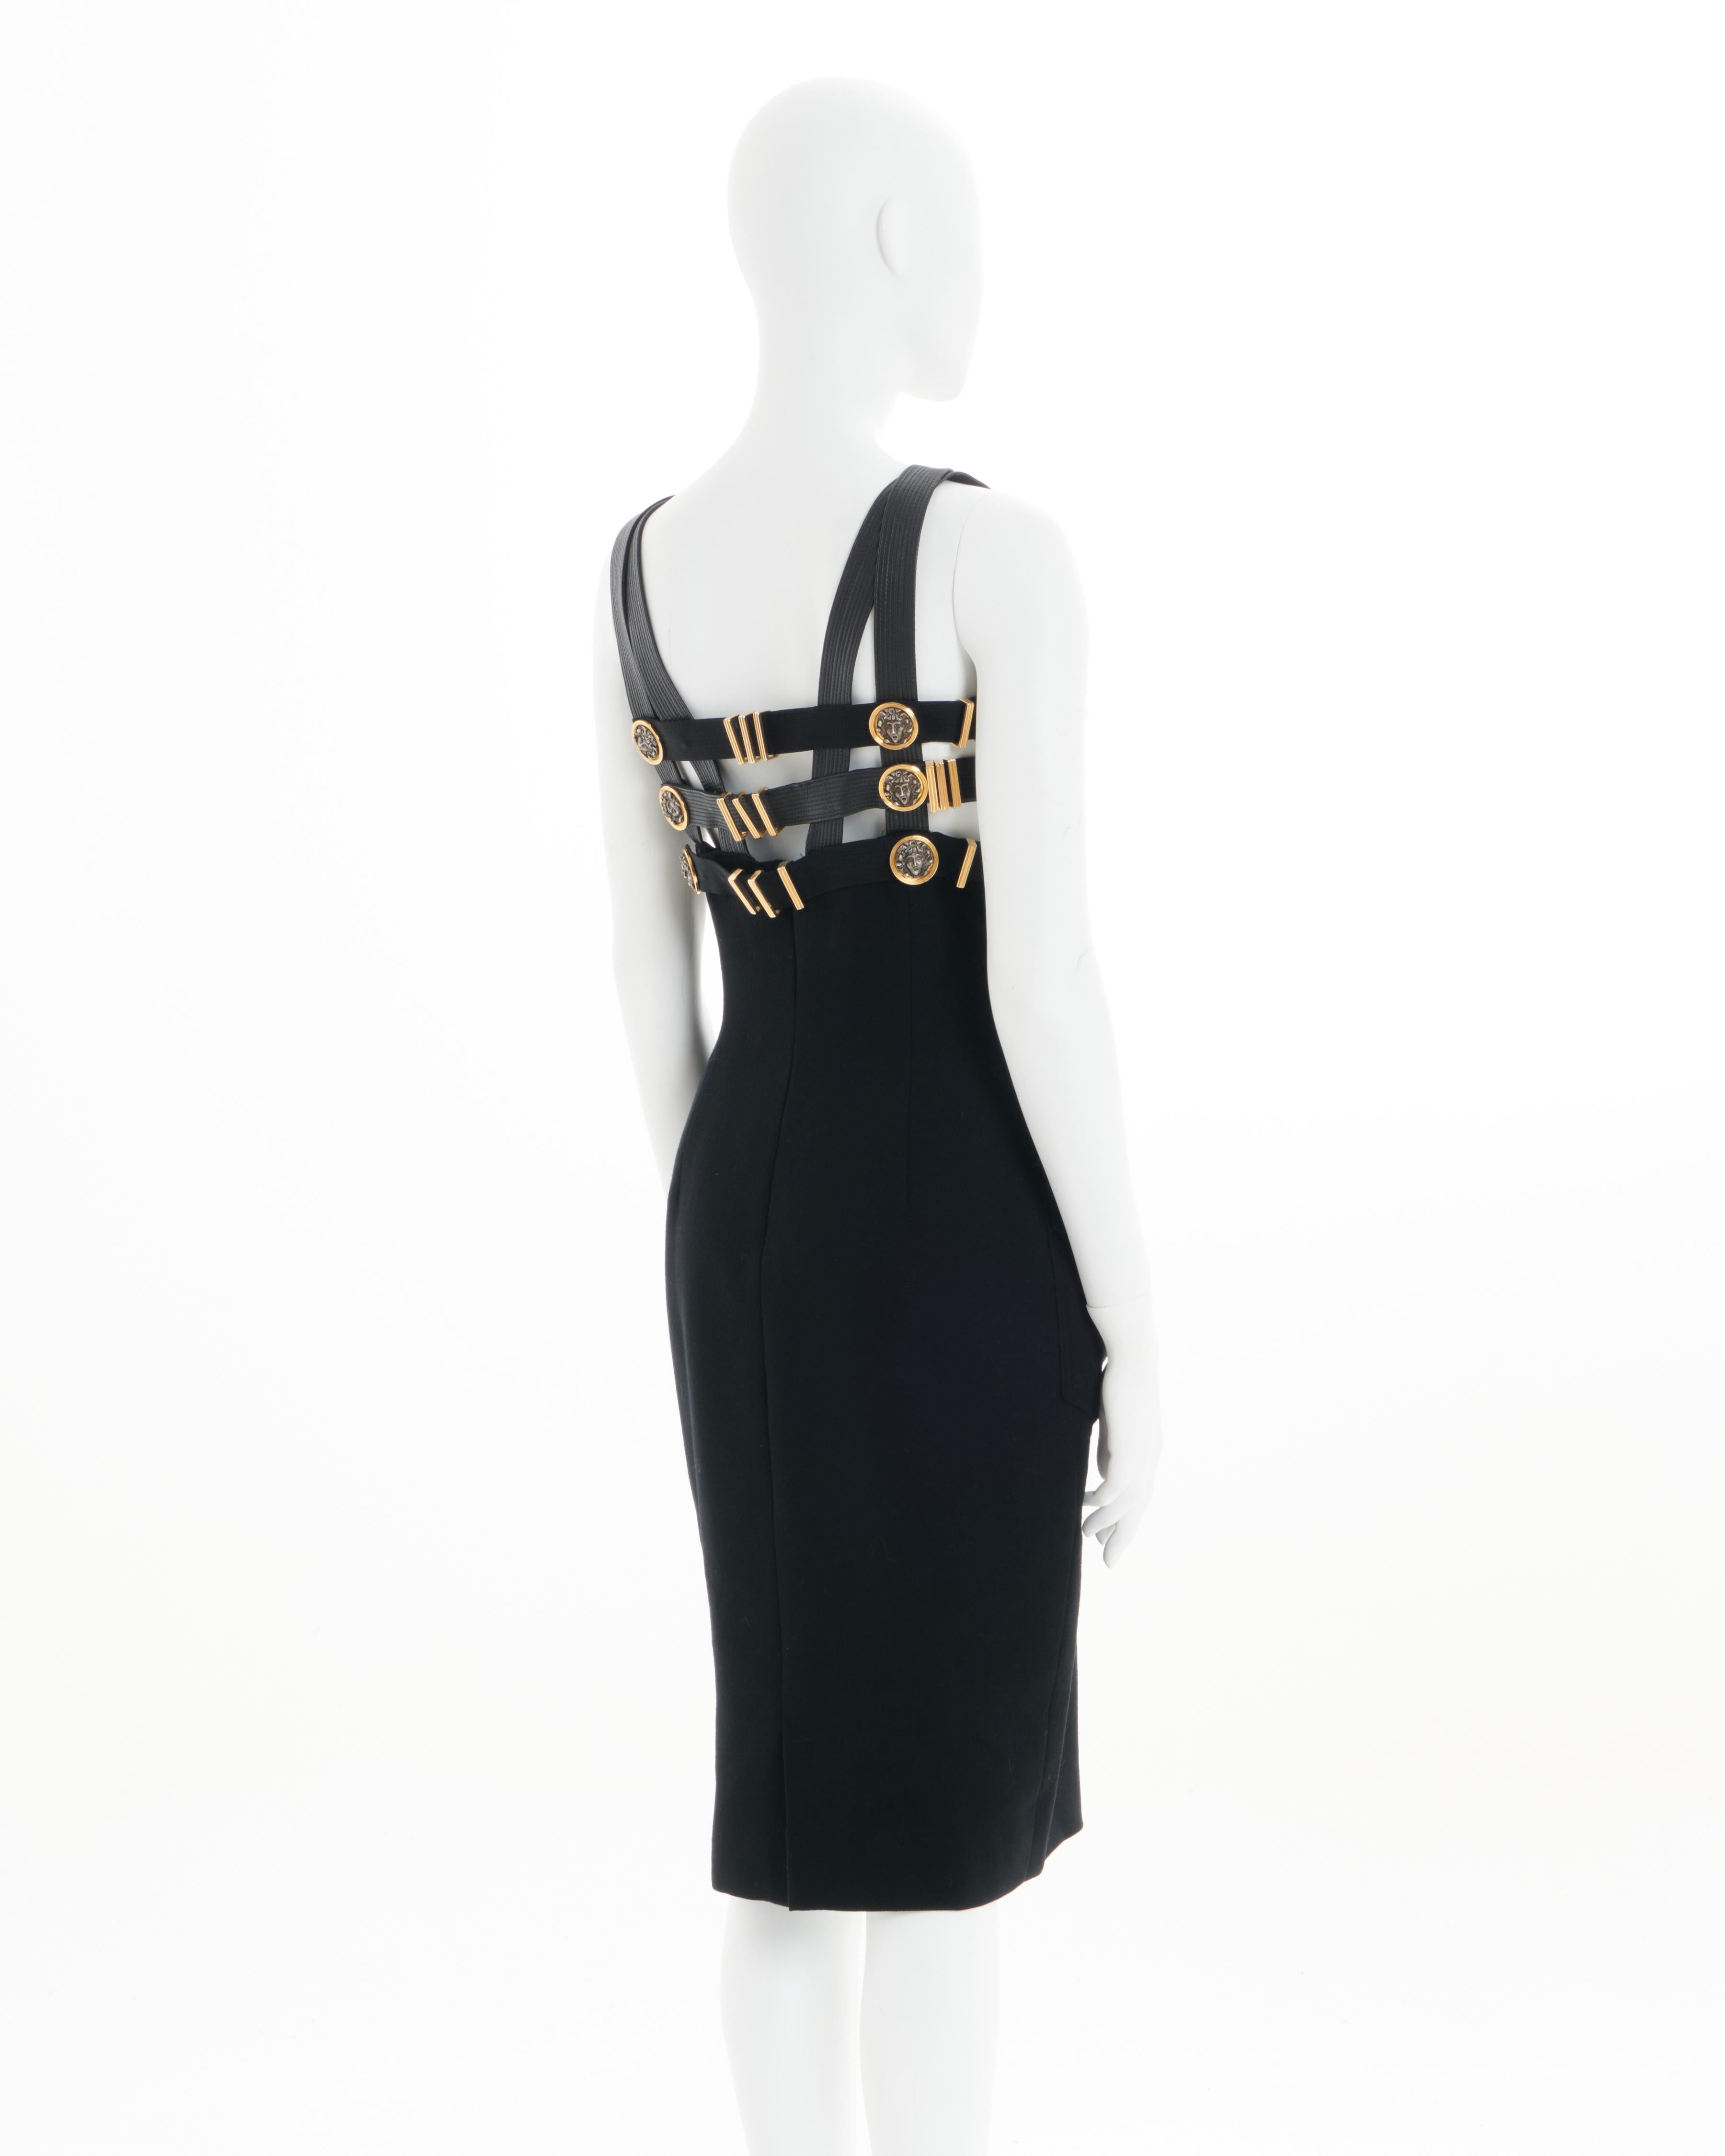 Gianni Versace Couture F/W 1992 Black Bondage evening dress For Sale 1